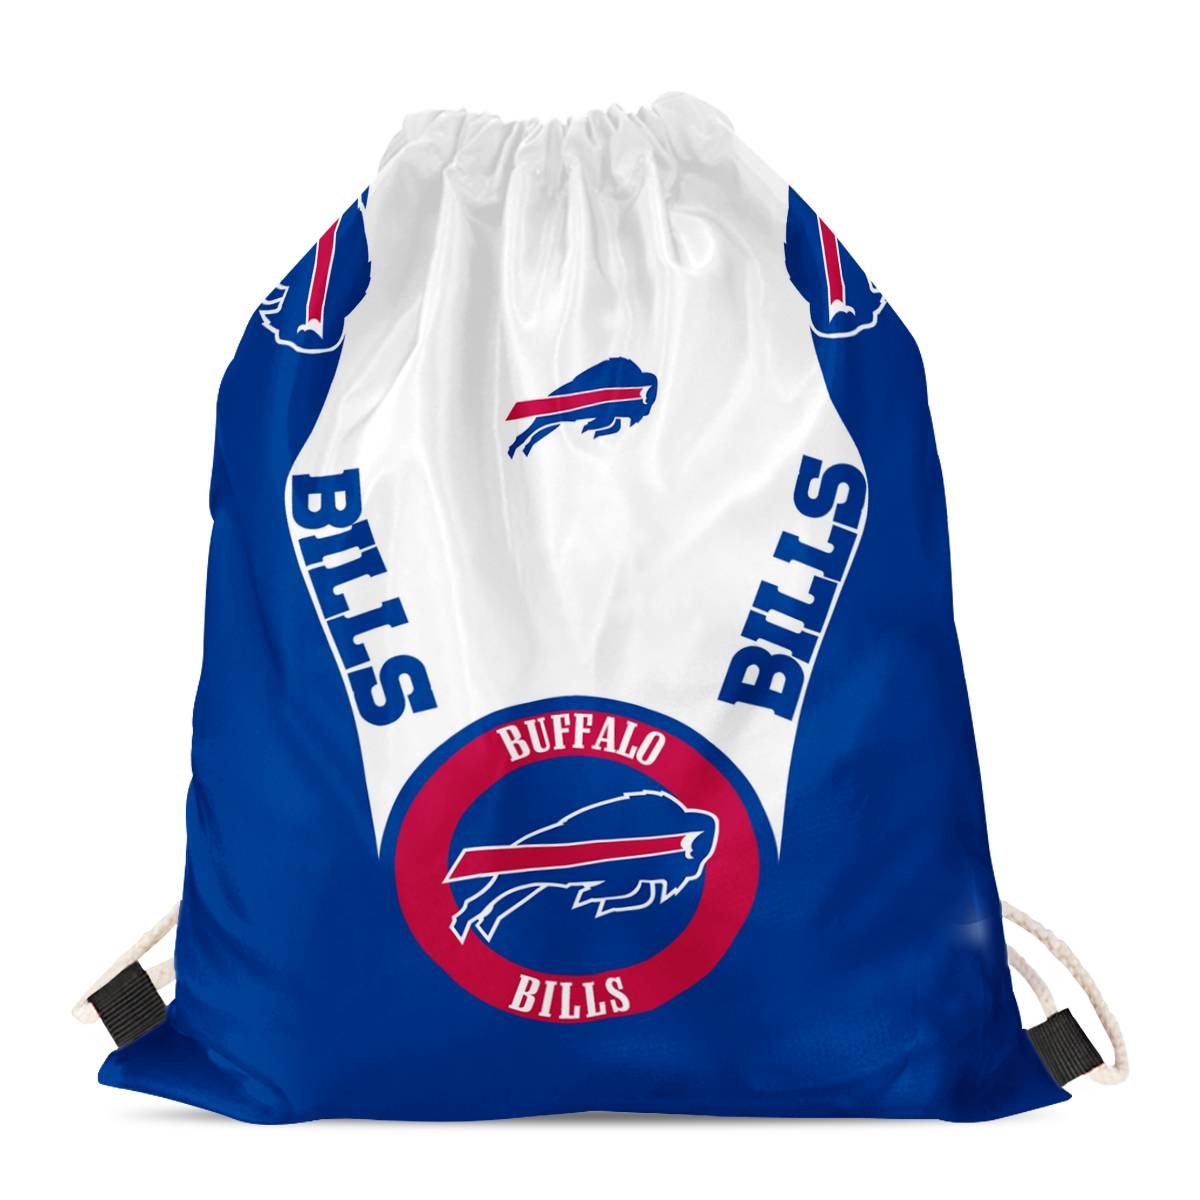 Buffalo Bills Drawstring Backpack sack / Gym bag 18" x 14" 001